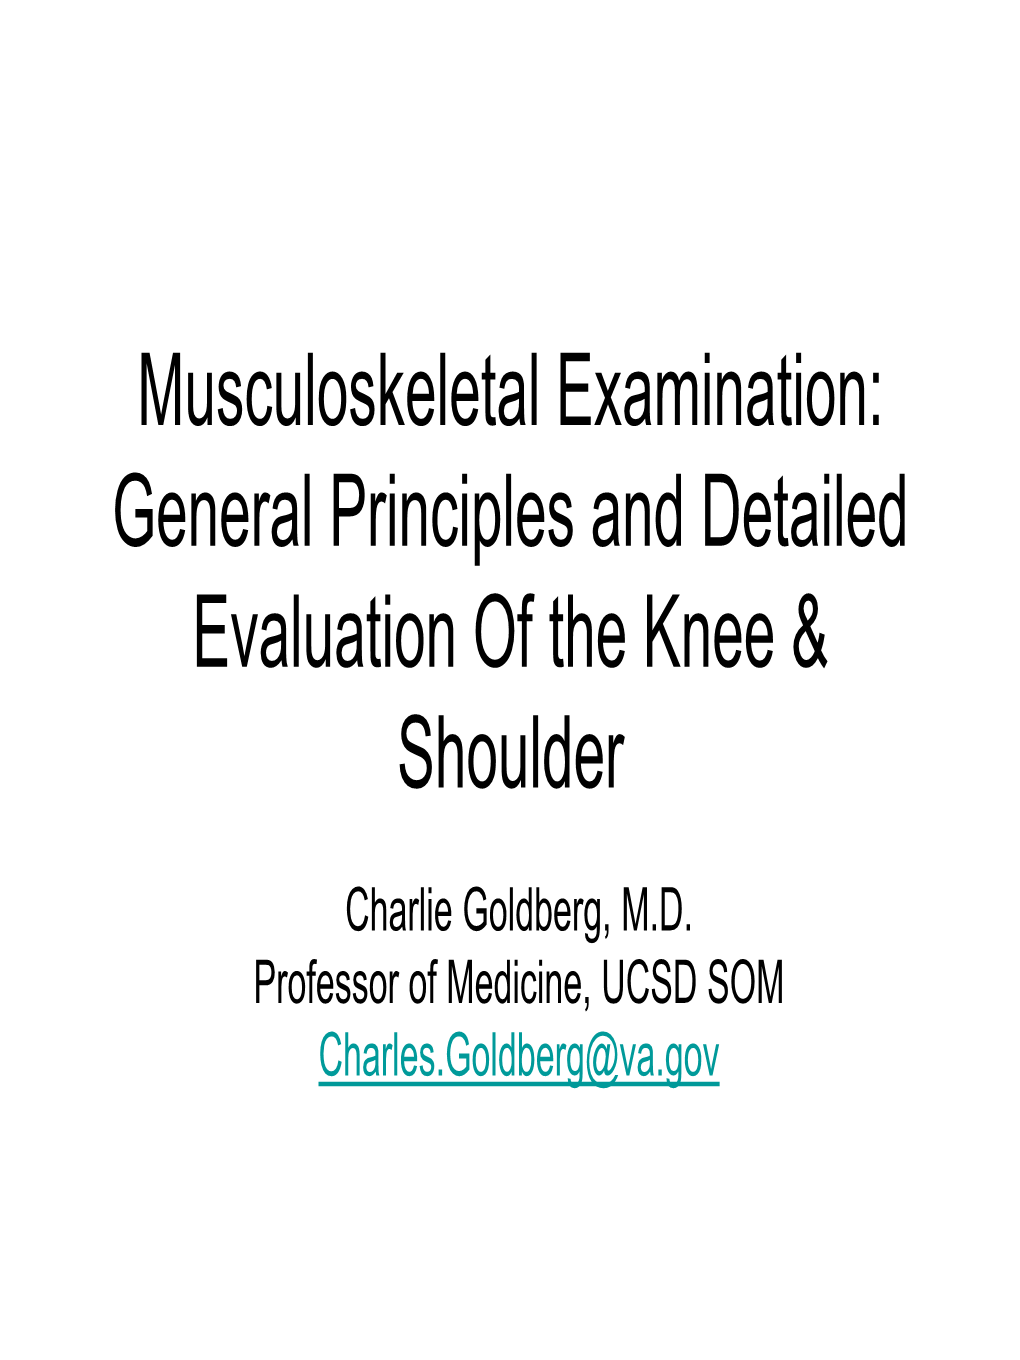 General Principles and Detailed Evaluation of the Knee & Shoulder